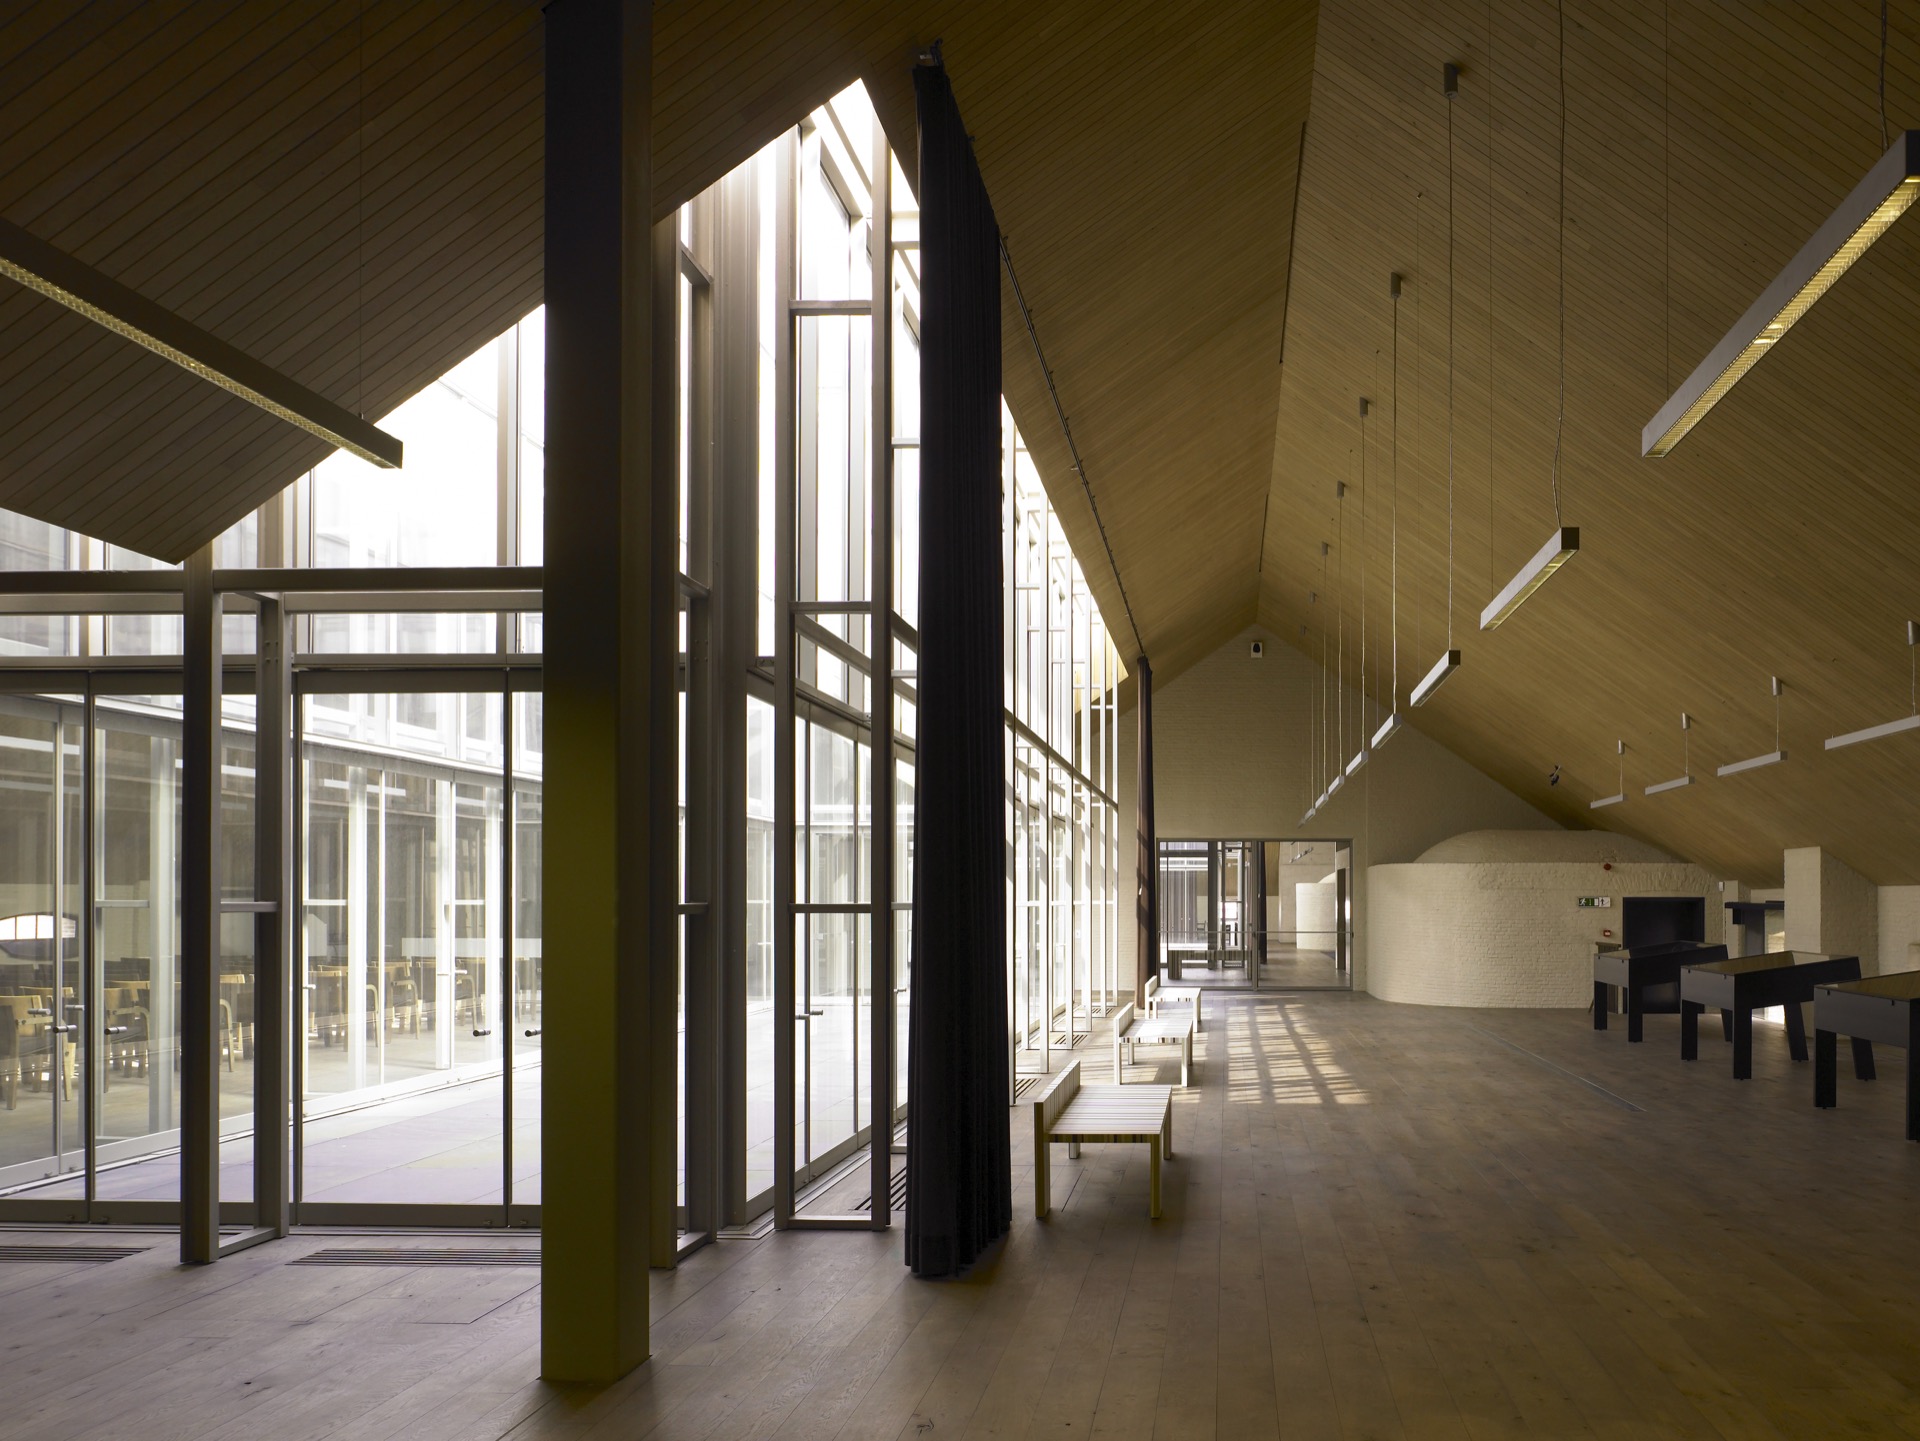 St Felix Pakhuis Antwerpen library building architecture design interior view